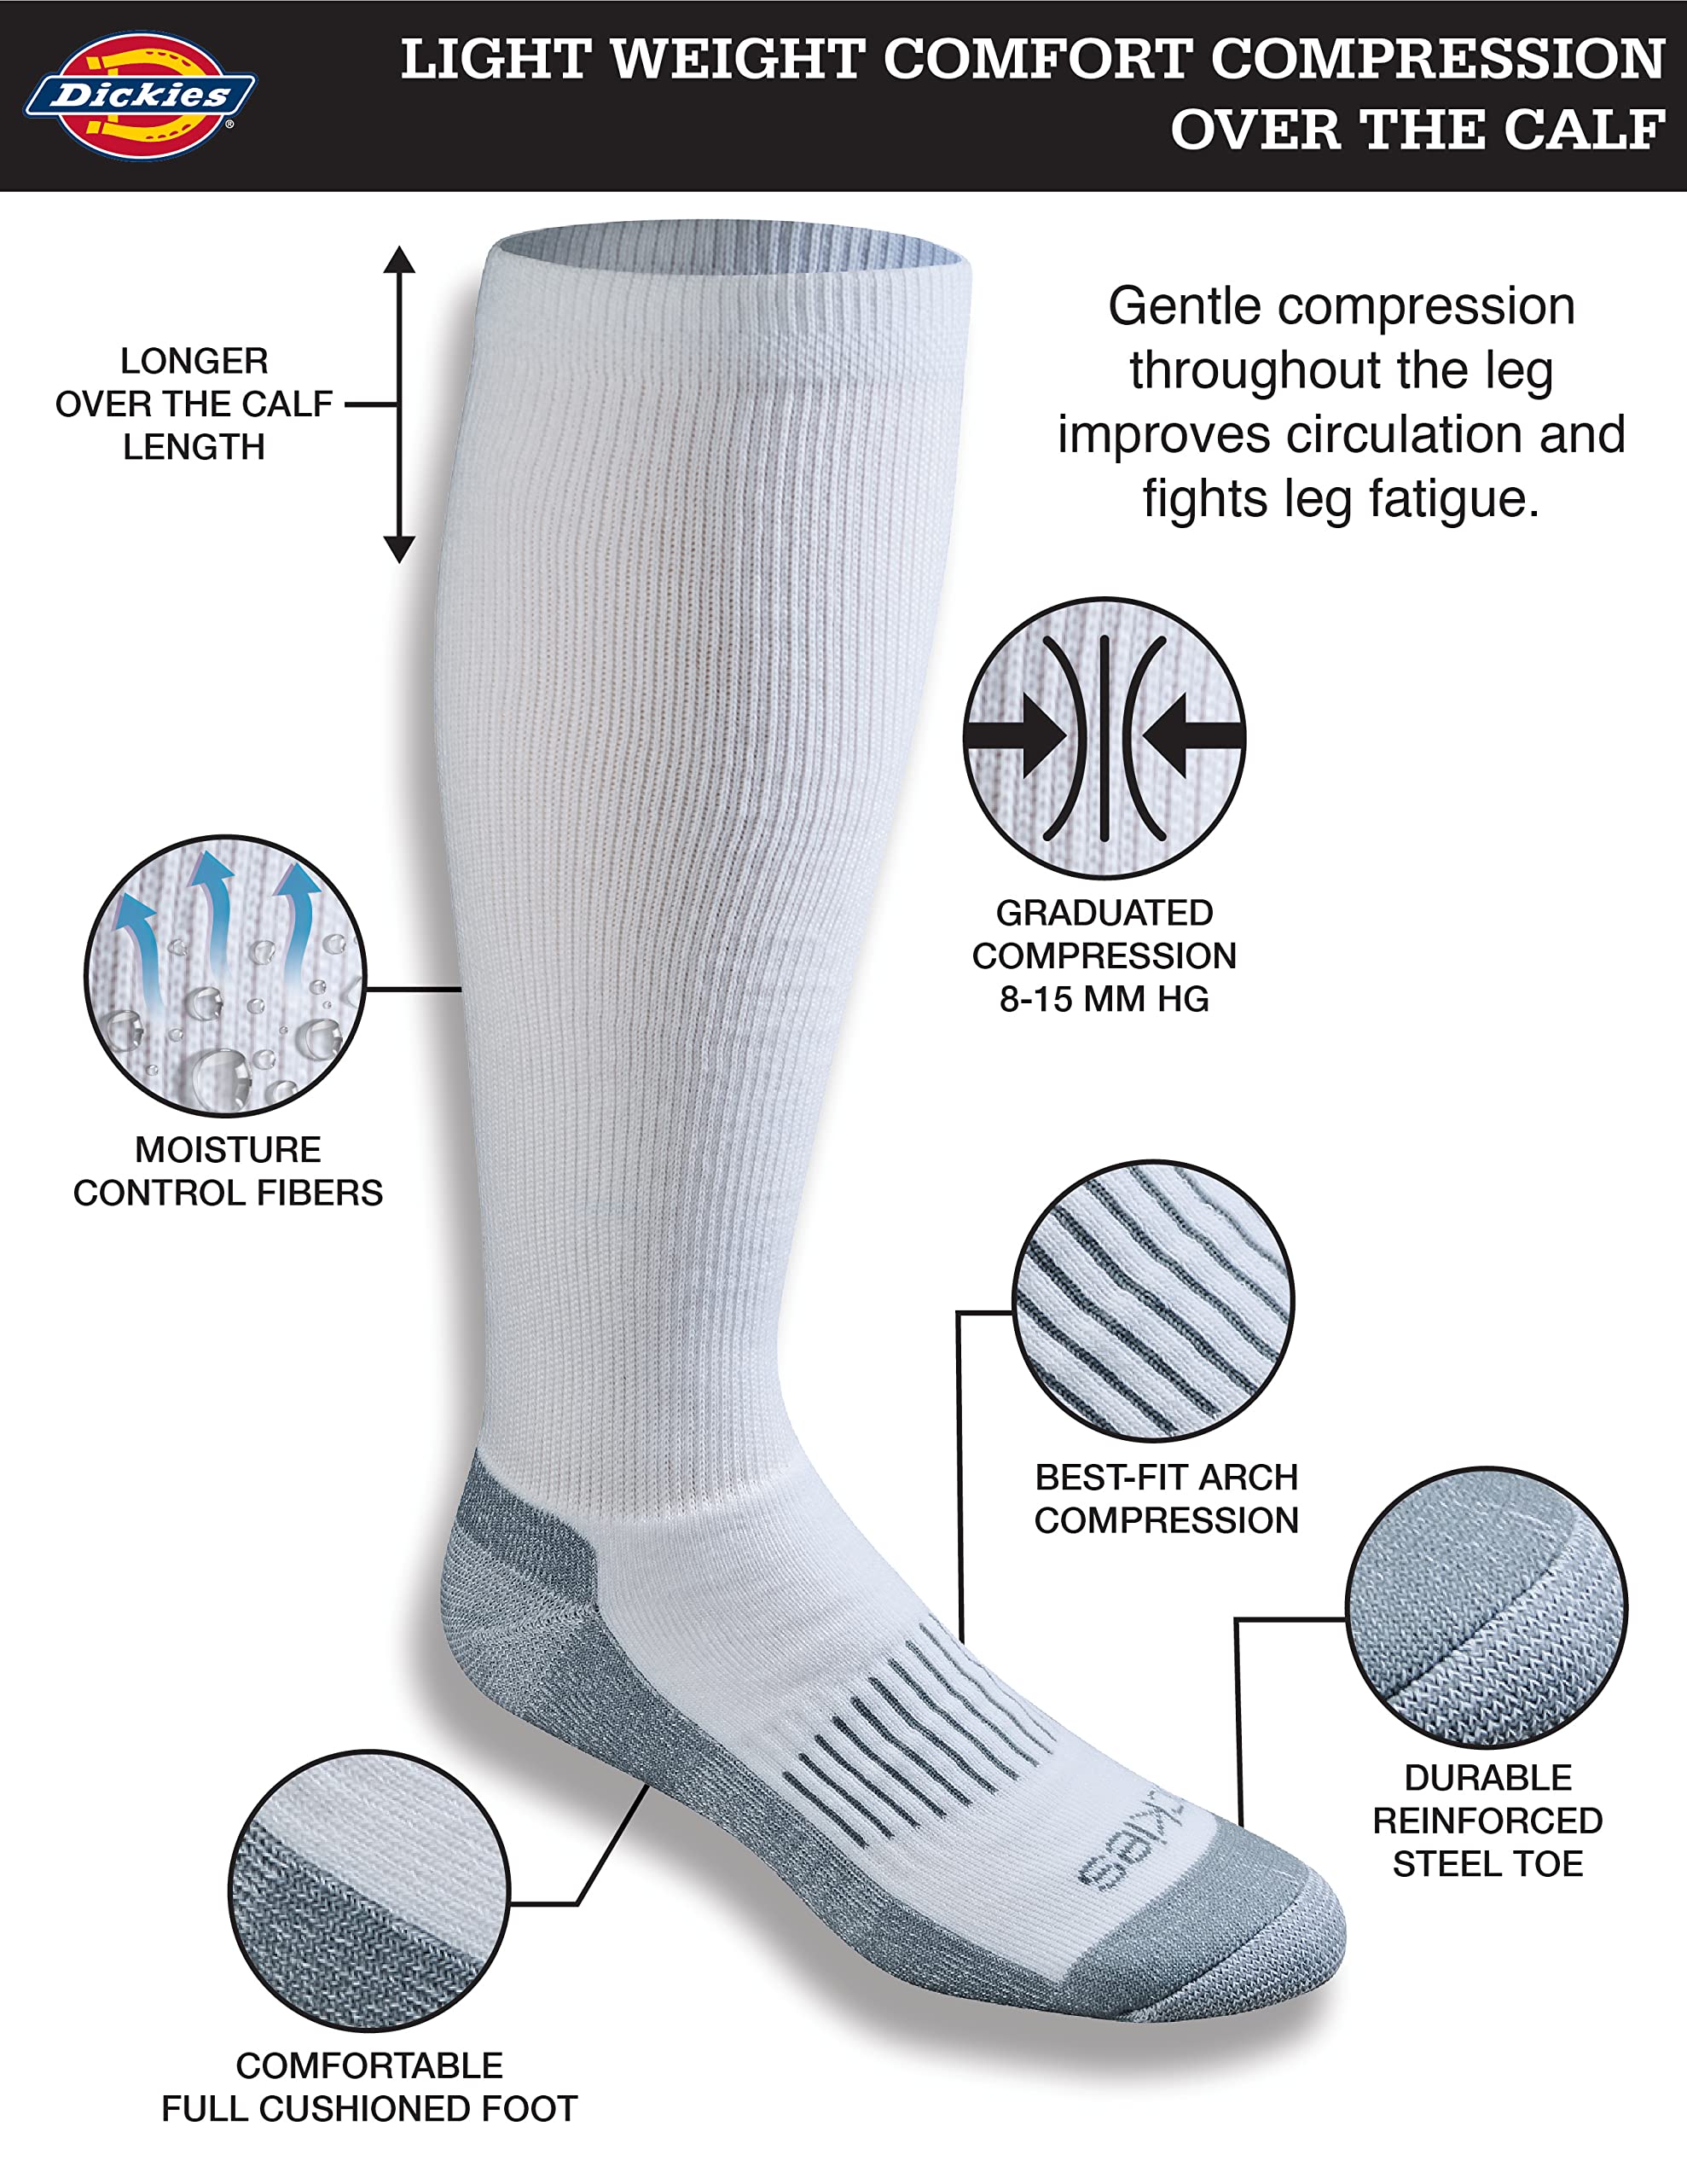 Dickies Men's Light Comfort Compression Over-The-Calf Socks